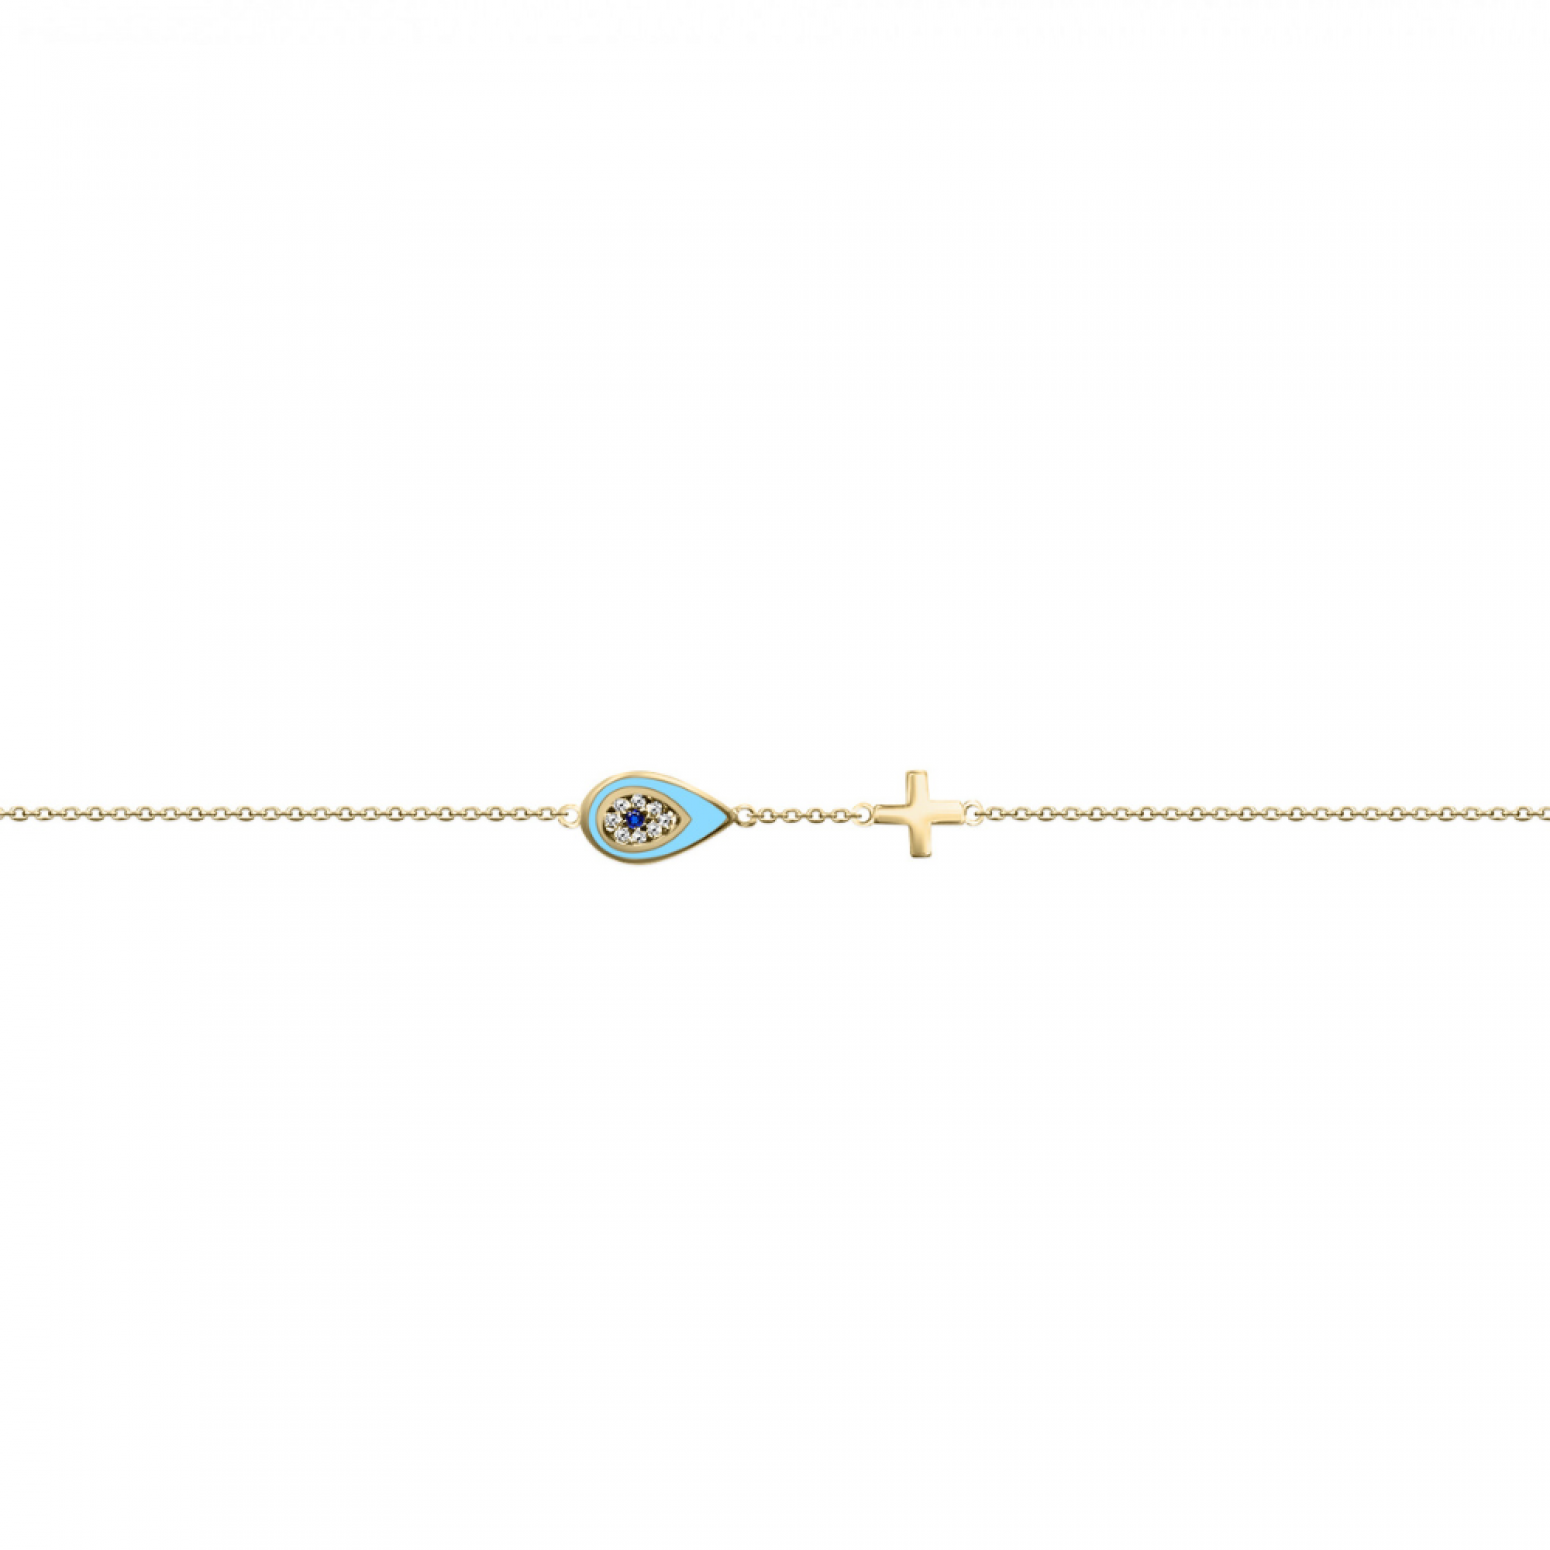 Bracelet with eye and cross, Κ9 gold with enamel, br2731 BRACELETS Κοσμηματα - chrilia.gr